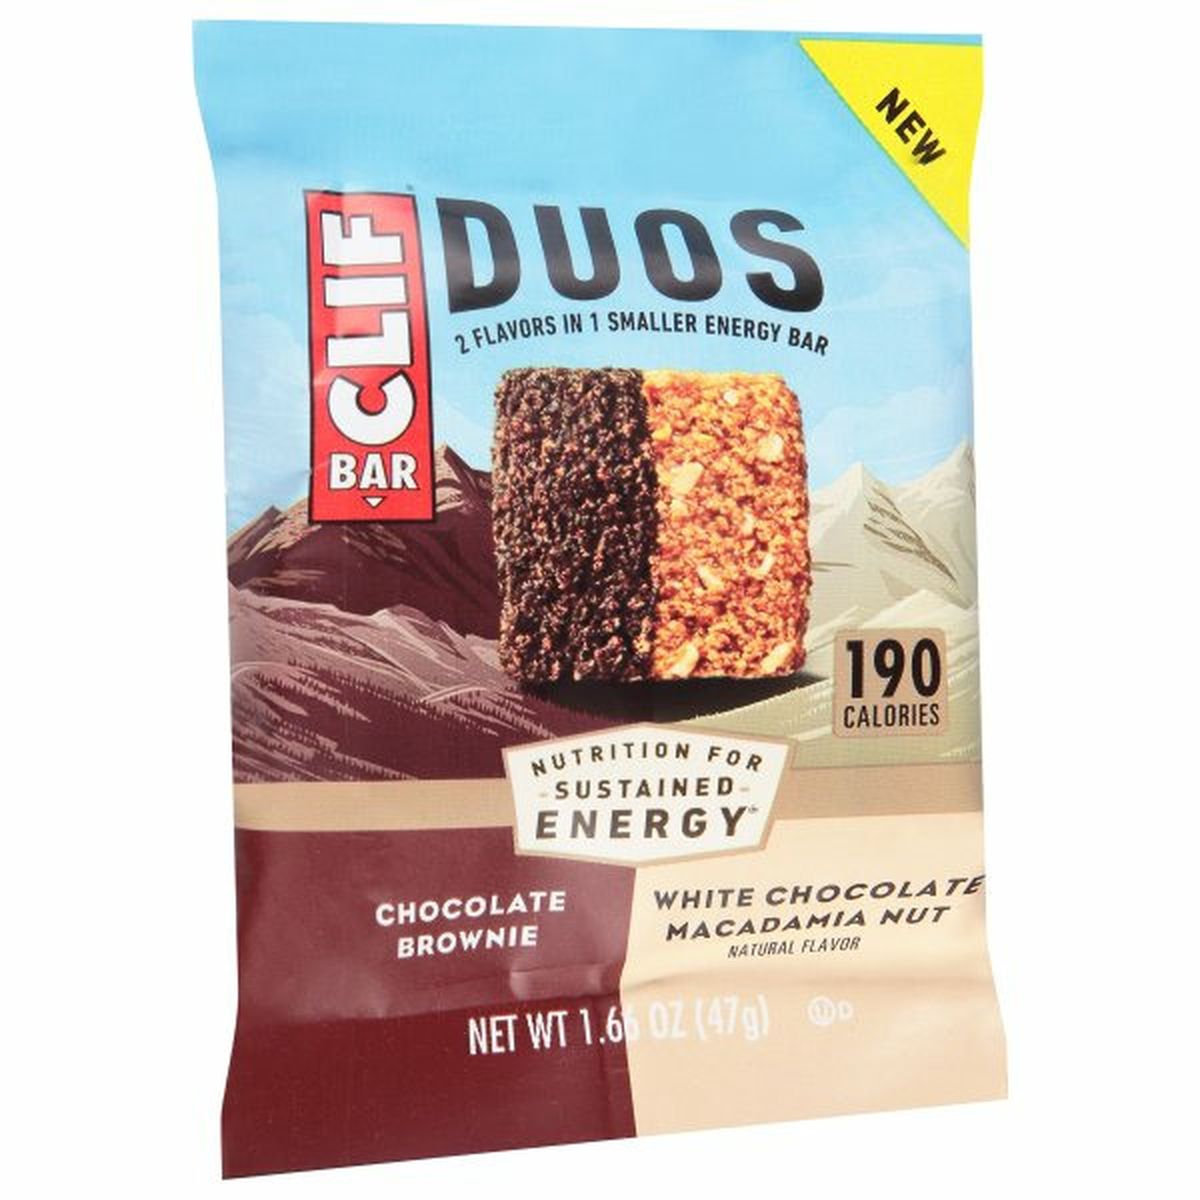 Calories in CLIF BAR Duos Energy Bar, Chocolate Brownie, White Chocolate Macadamia Nut